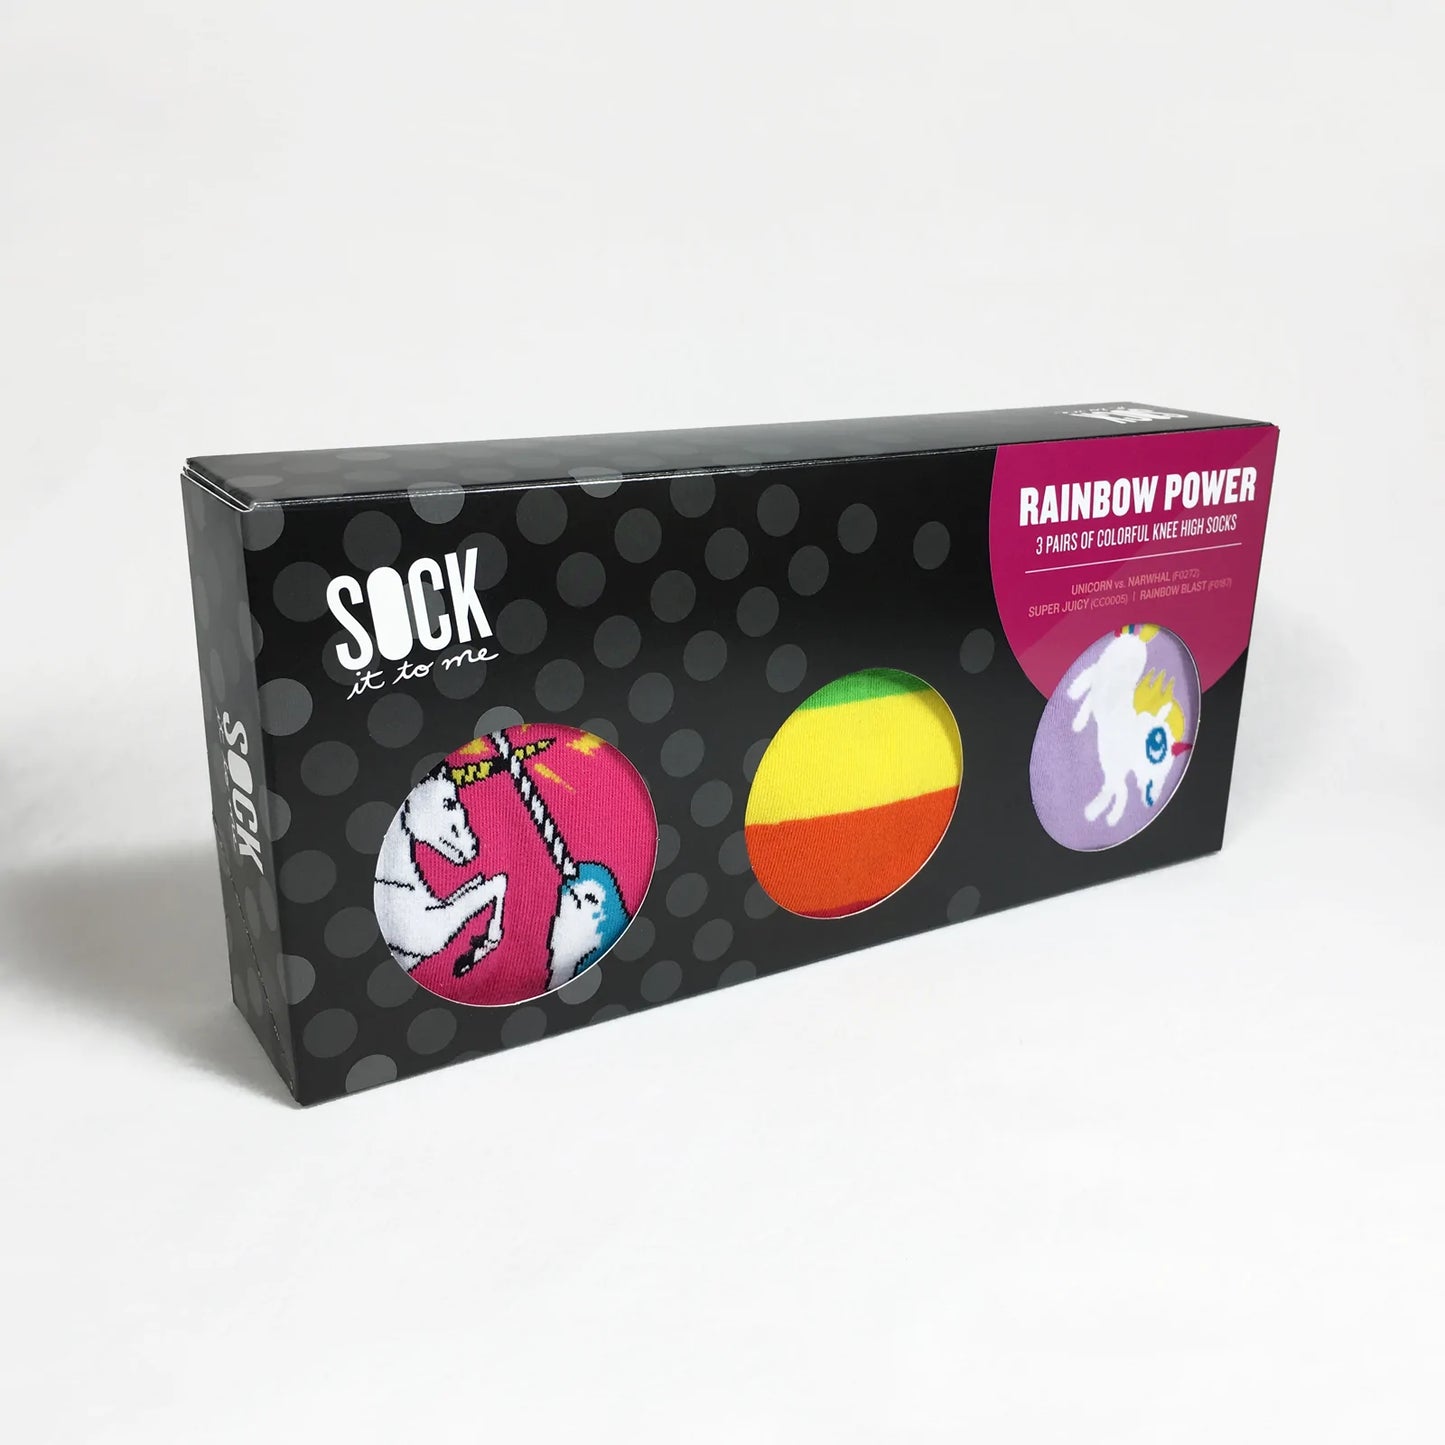 Sock it to me Rainbow Power Gift Box Set styles: UnicornVNarwhal, Super Juicy, Rainbow Blast Knee High